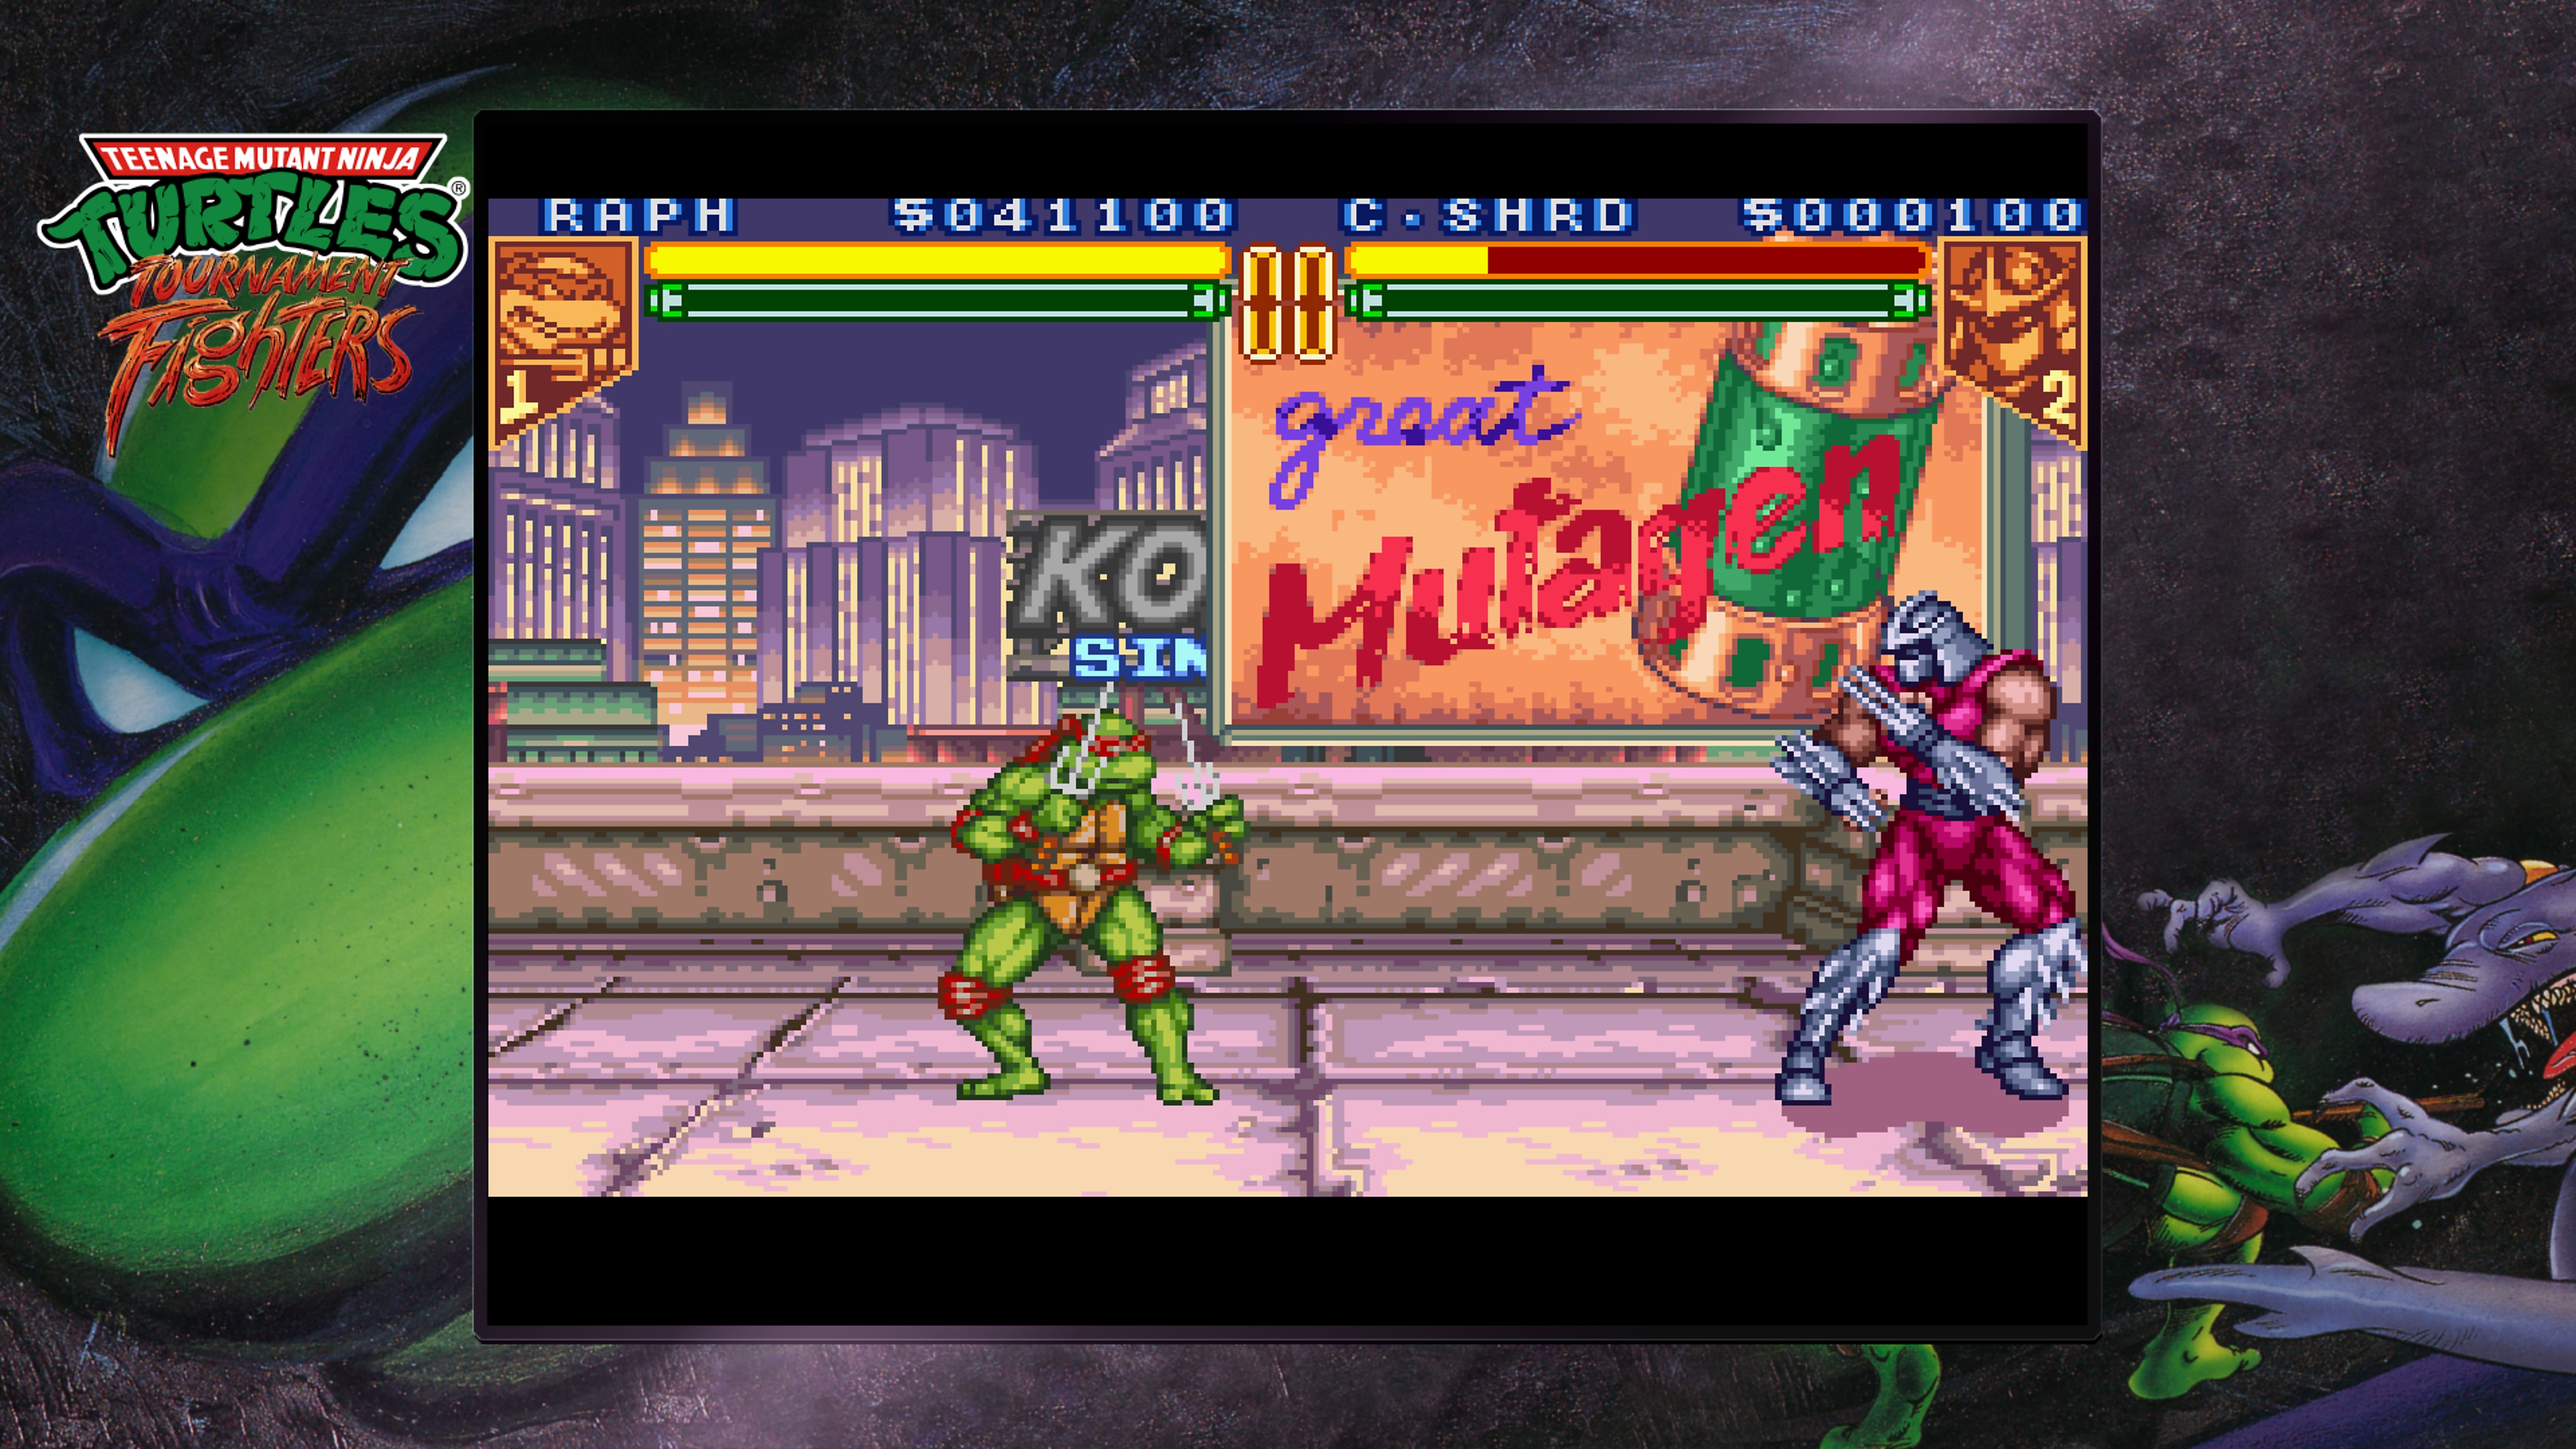 Colección Teenage Mutant Ninja Turtles: captura de pantalla de Tournament Fighters que muestra a Raphael peleando contra Shredder en una azotea